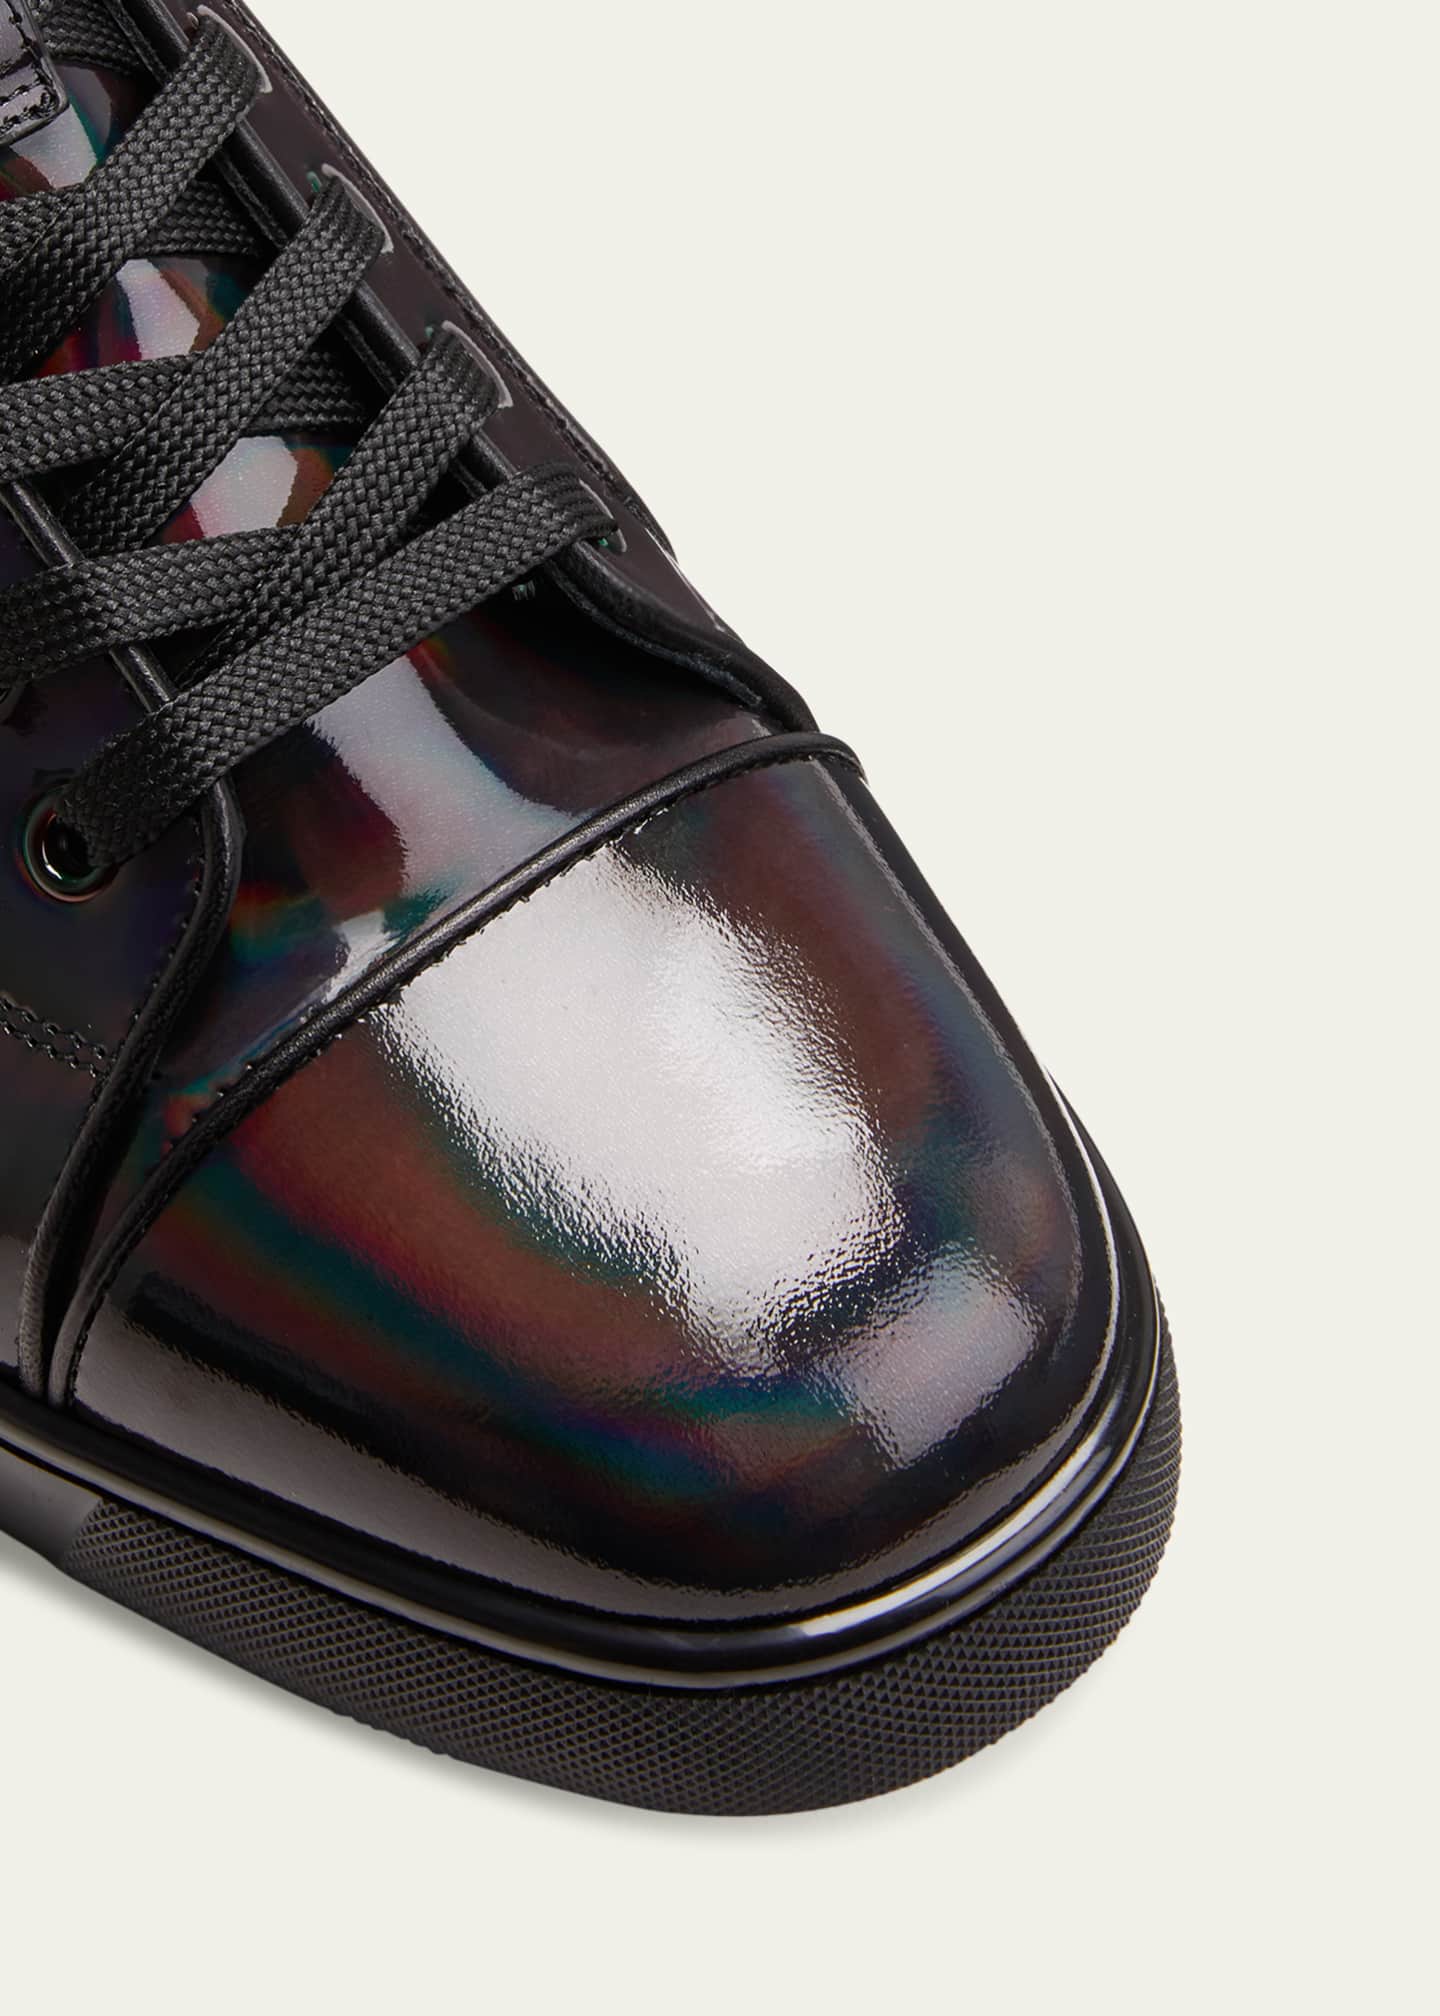 Christian Louboutin Men's Fun Louis Patent Leather Low-Top Sneakers Goodman